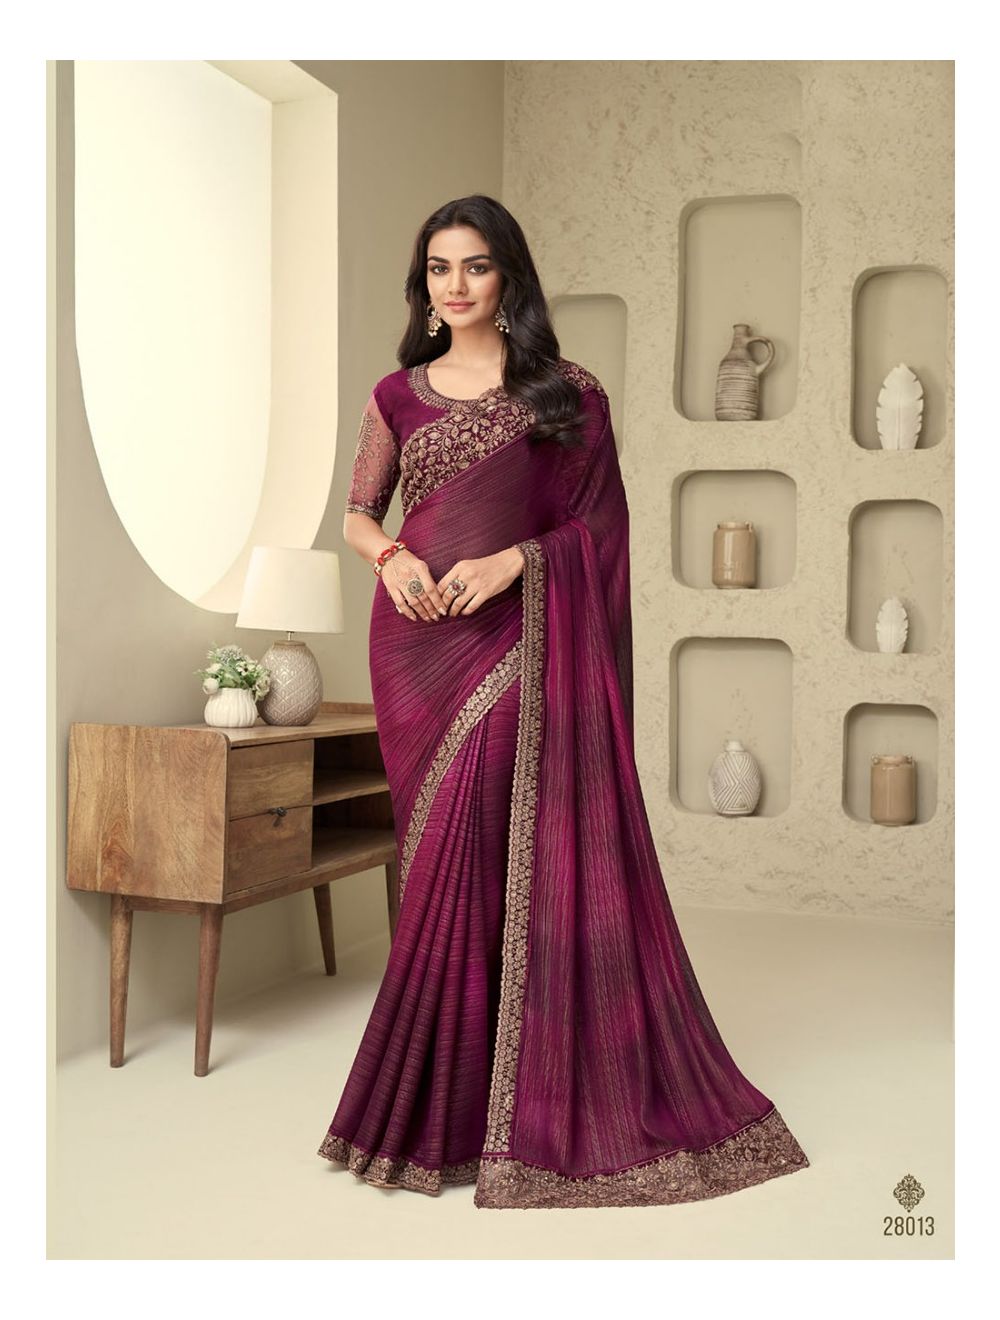 Gold Shimmer Saree and Gold Shimmer Sari online shopping